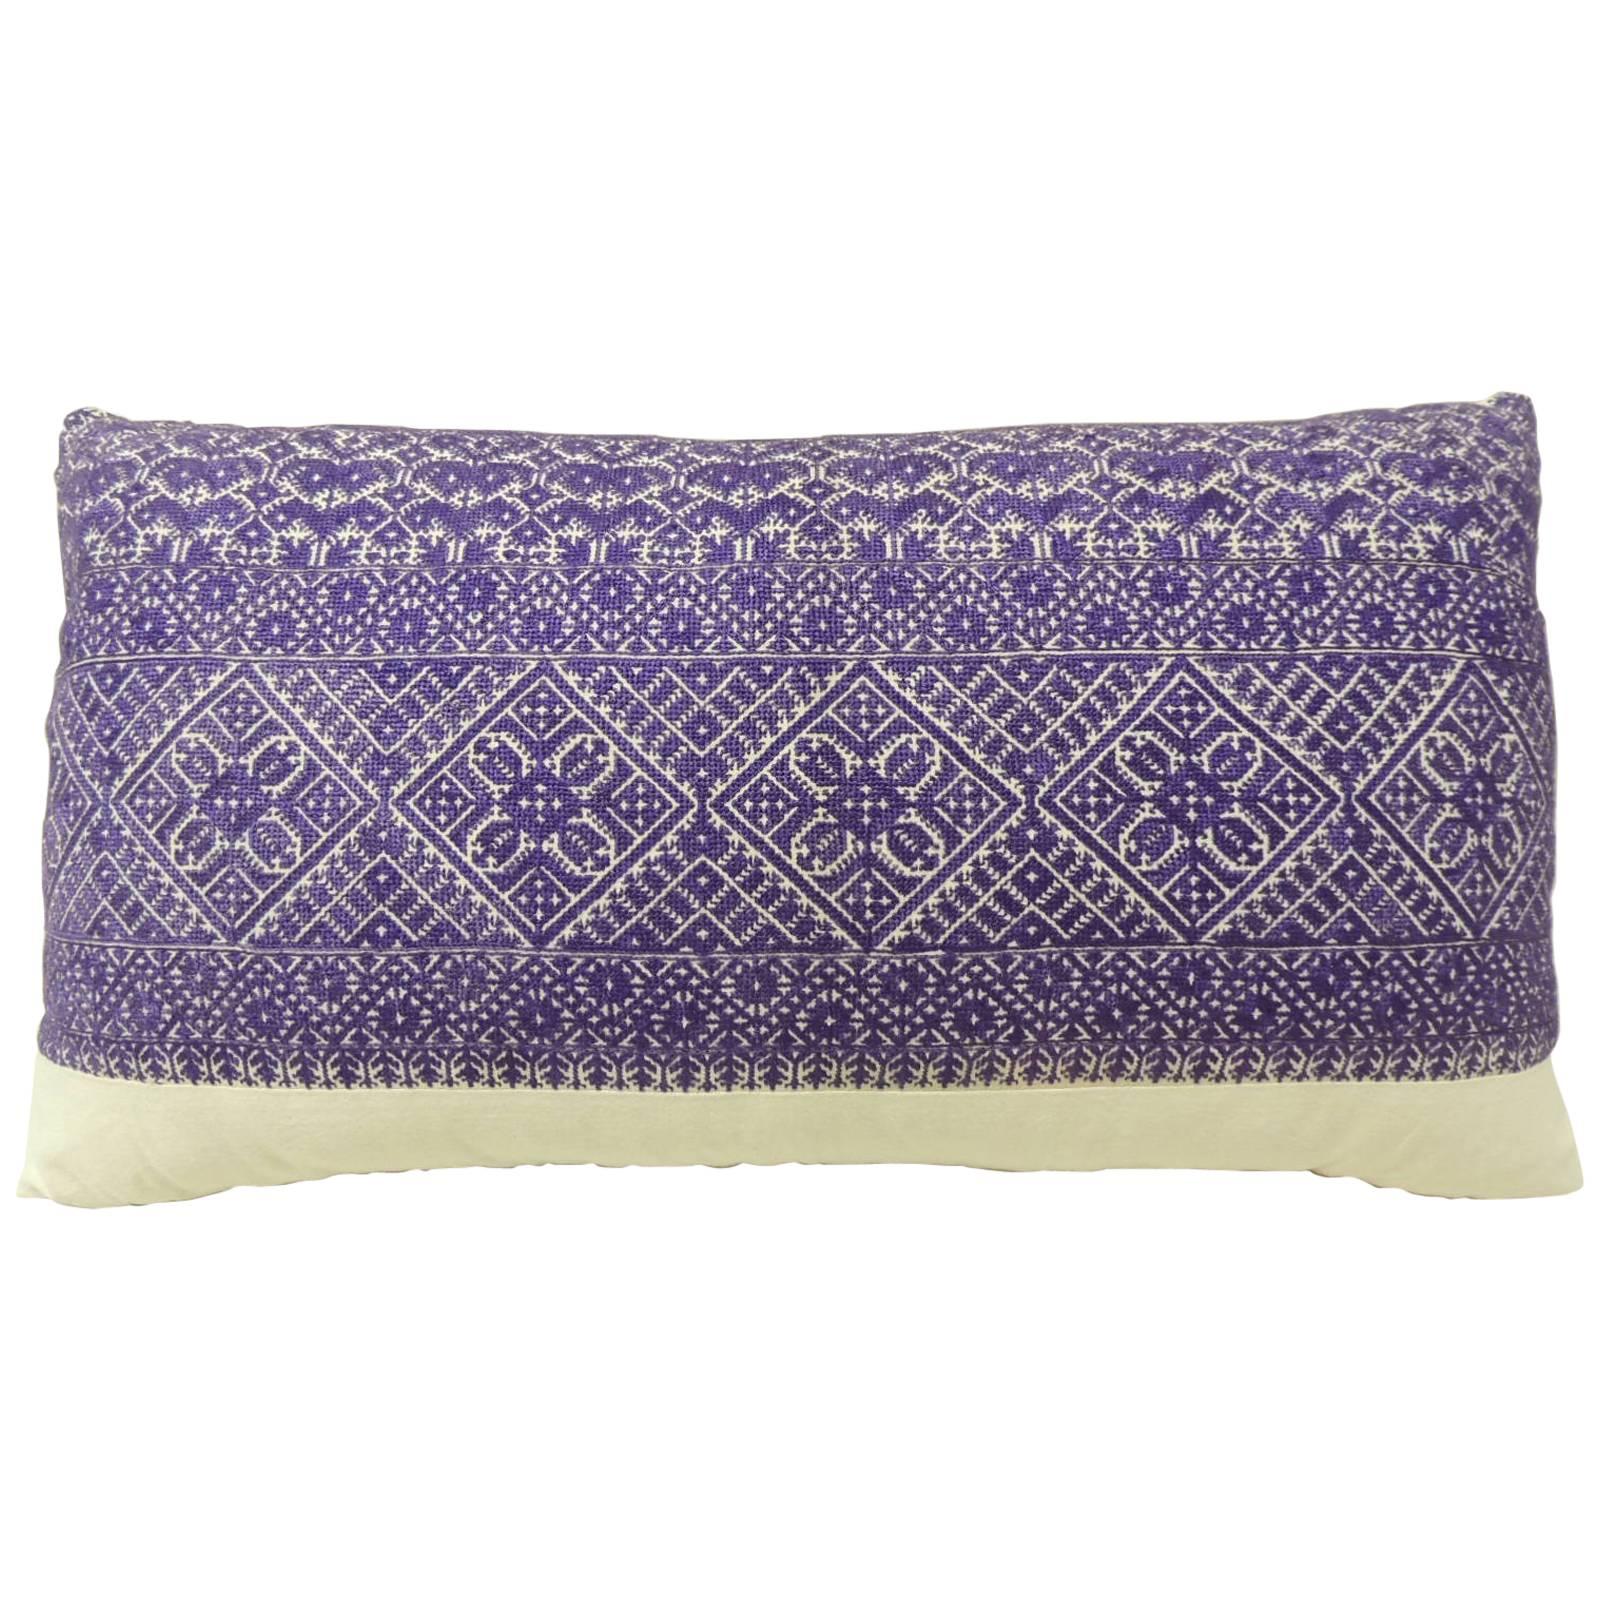 Antique Purple Embroidery Fez Decorative Bolster Pillow